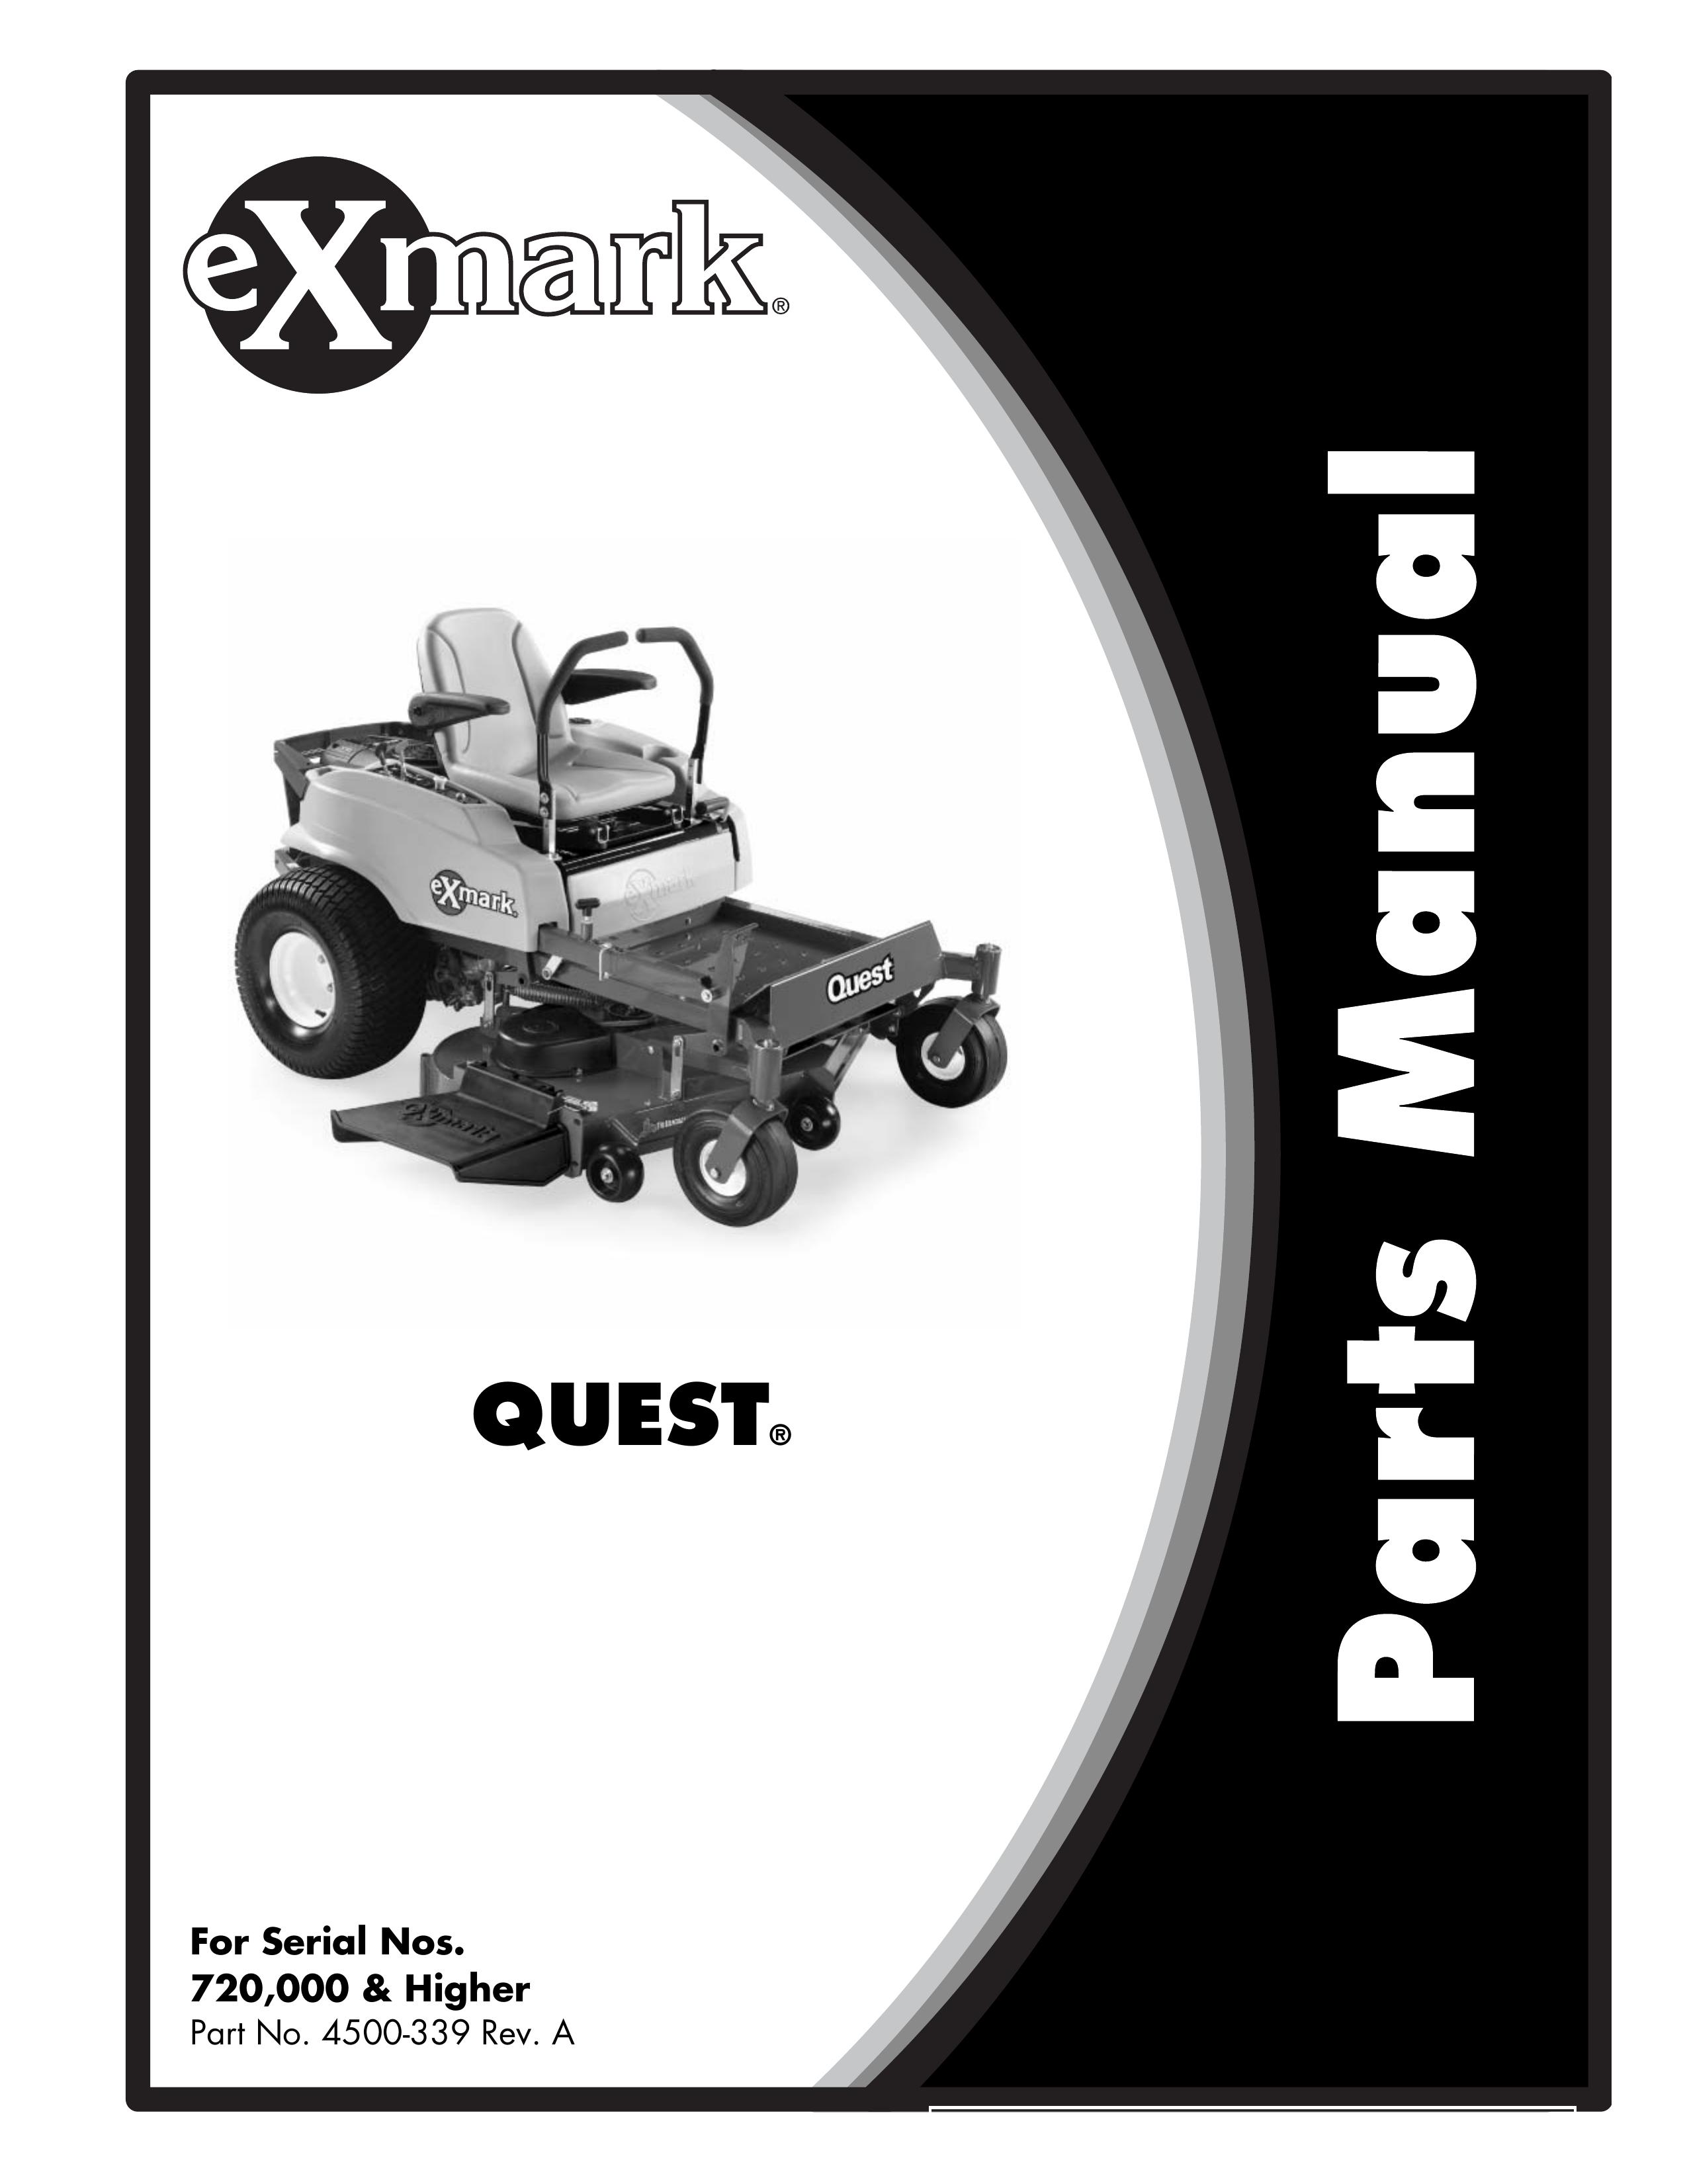 Exmark 4500-339 Lawn Mower User Manual